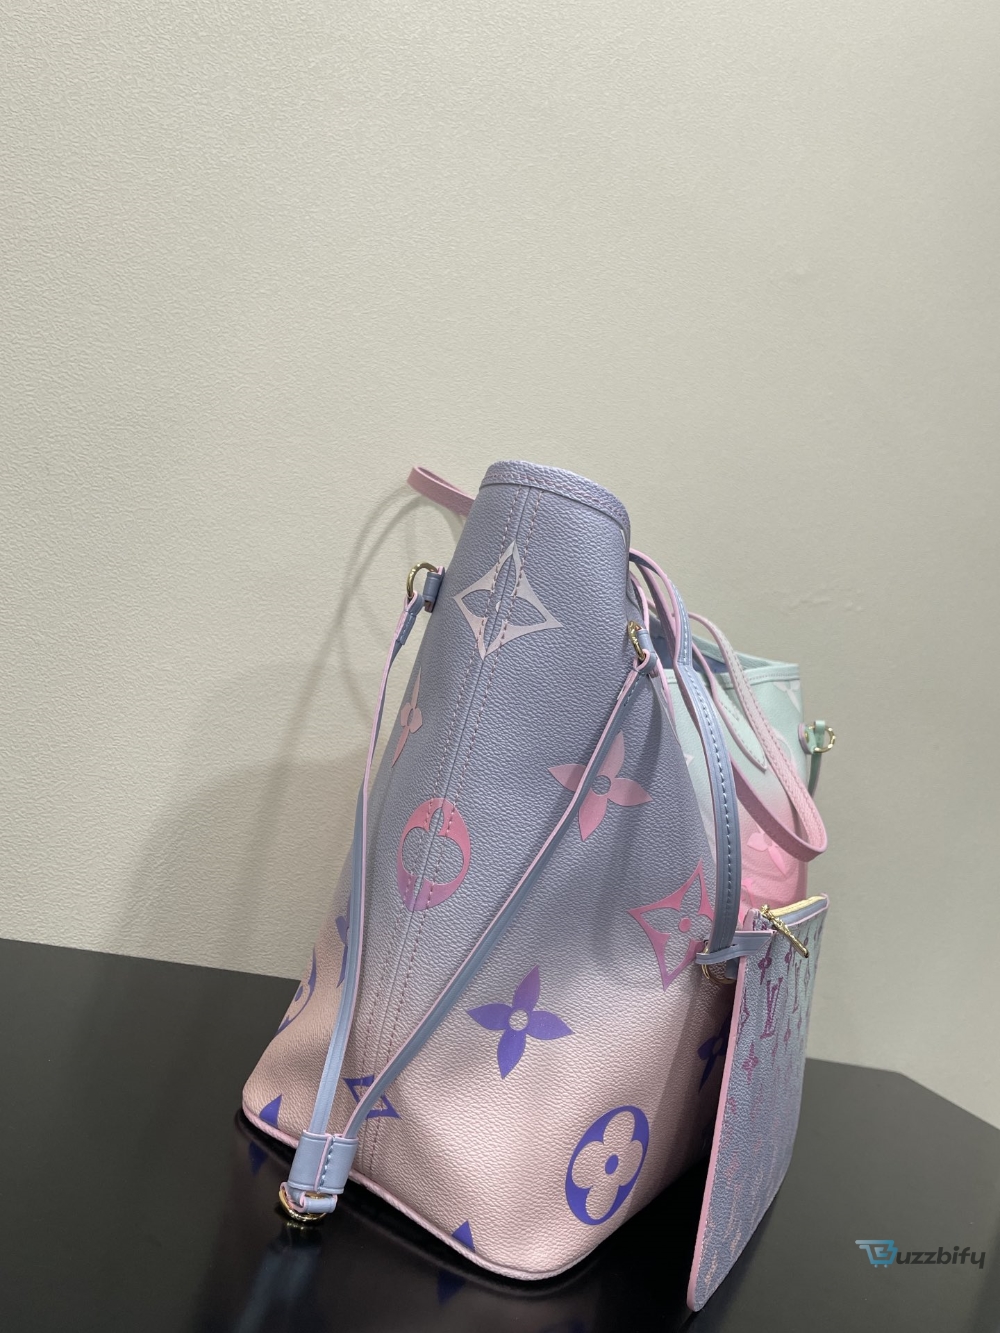 louis vuitton neverfull mm tote bag monogram canvas sunrise pastel for women womens handbags shoulder bags 122in31cm lv m46077 2799 buzzbify 1 58